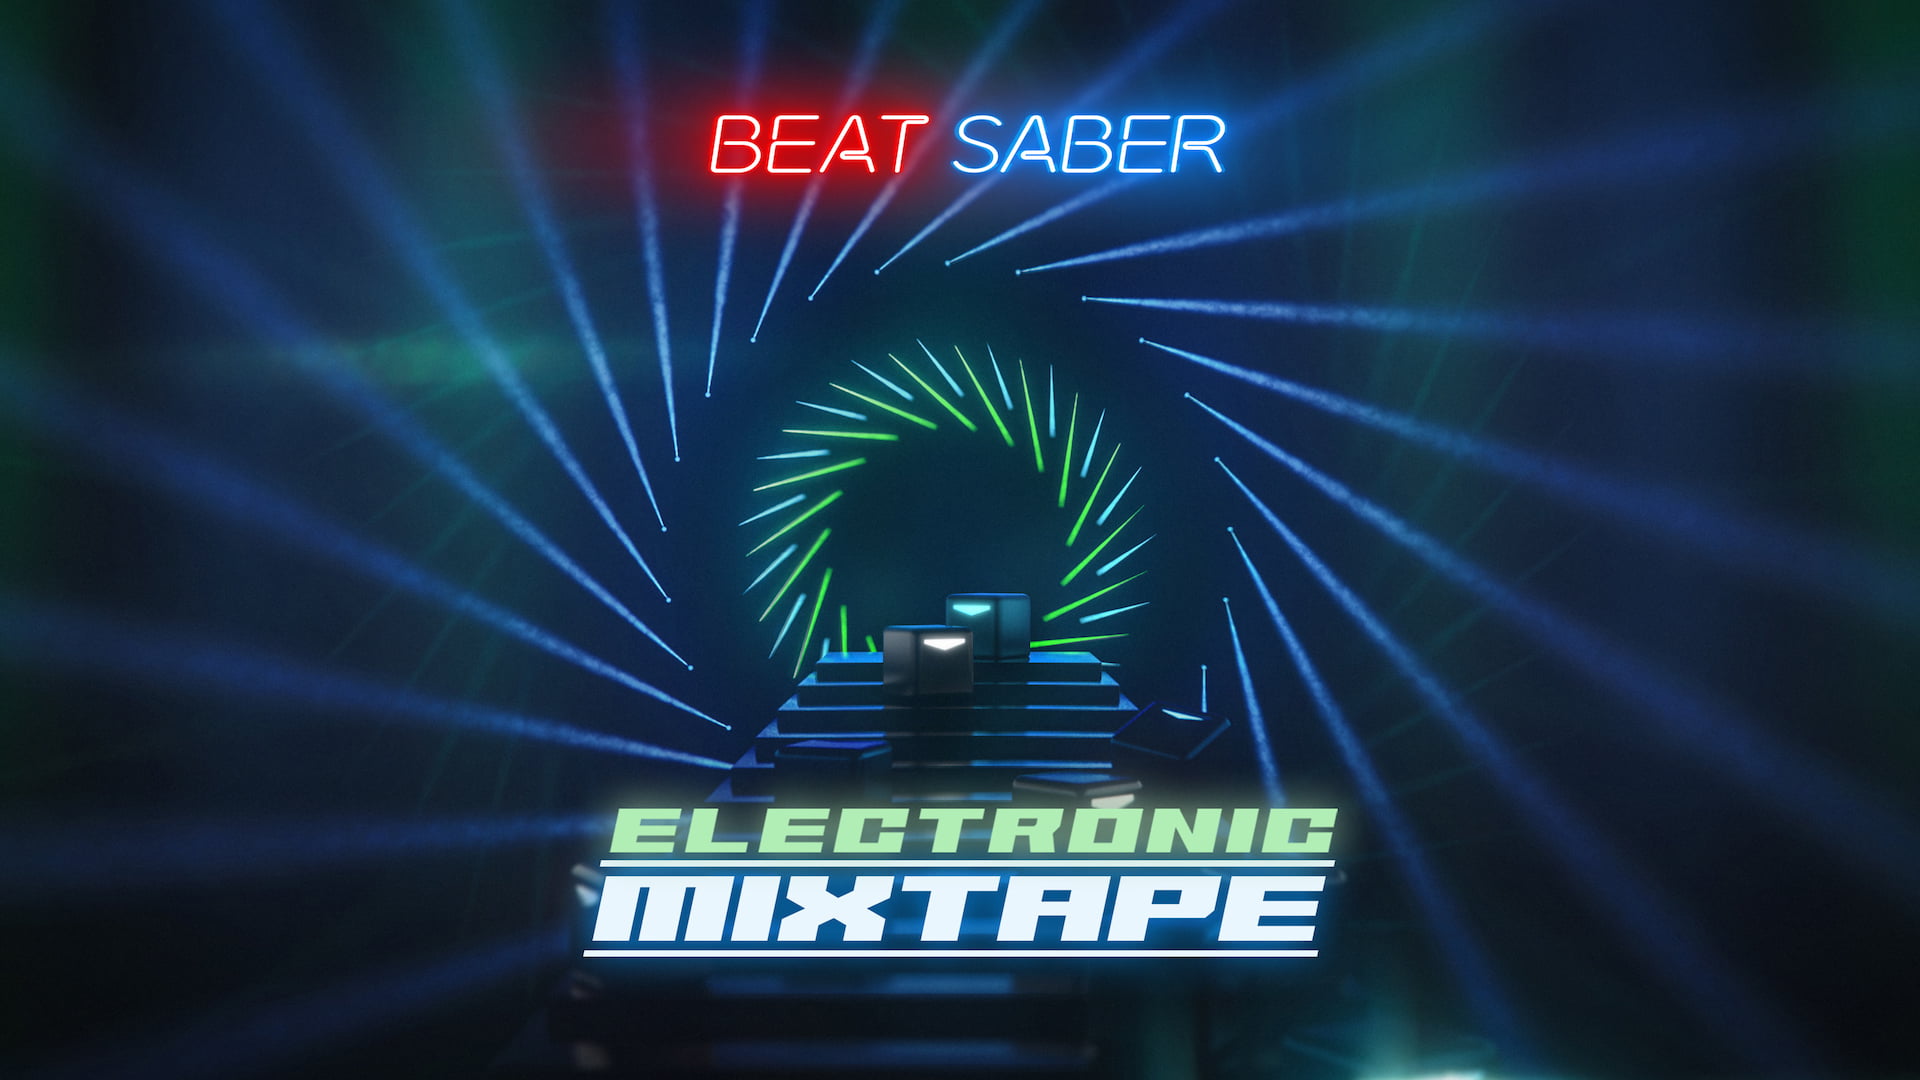 Beat Saber: "Electronic Mixtape" brings heaps of EDM classics